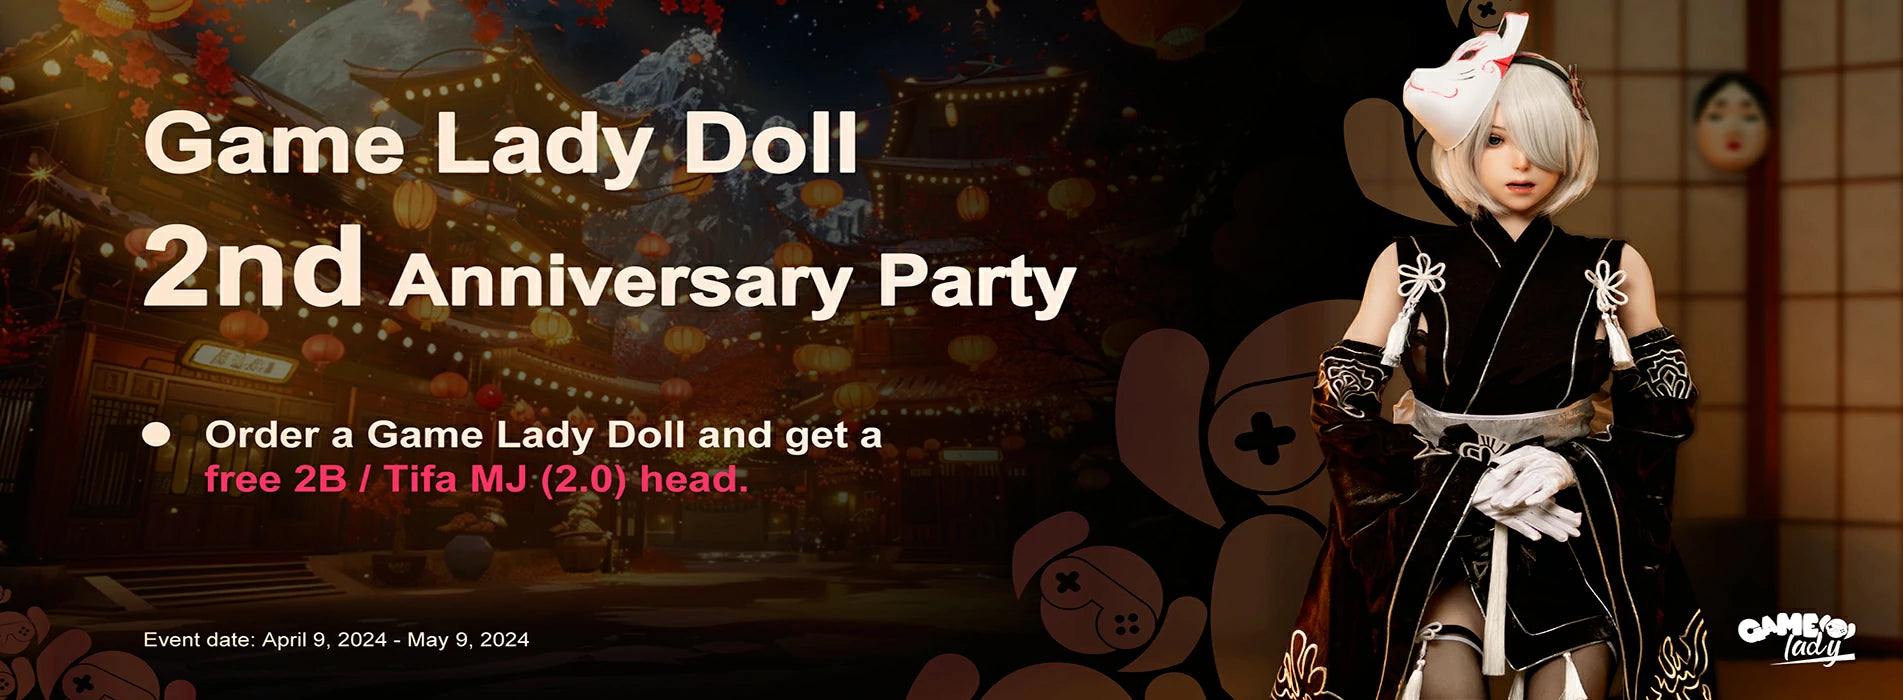 gamelady dolls-banner